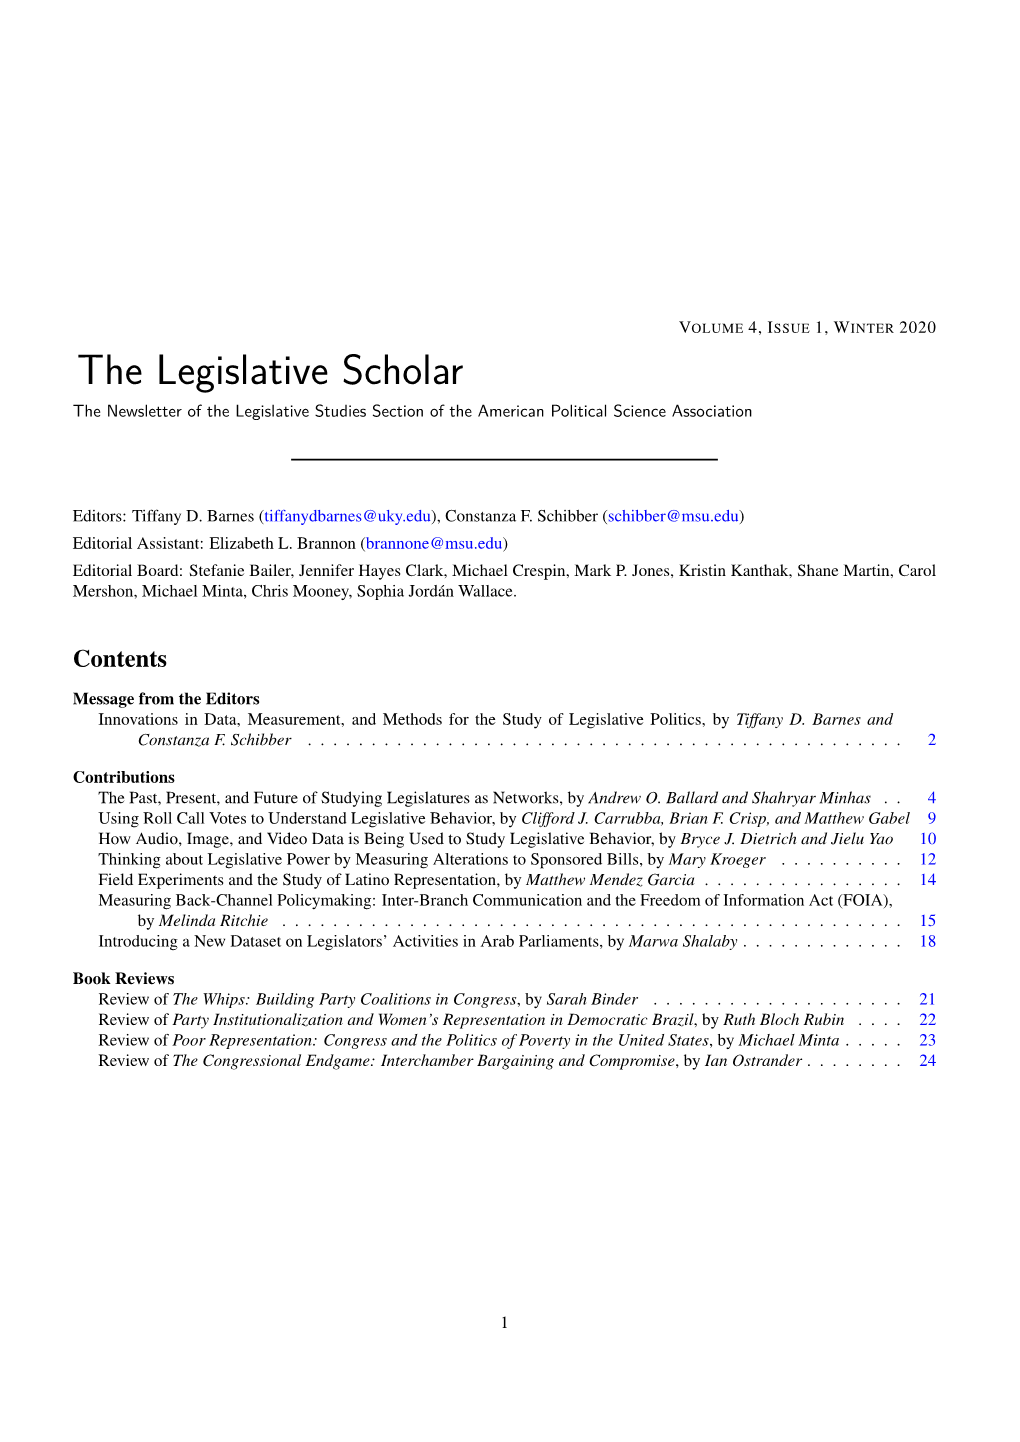 The Legislative Scholar the Newsletter of the Legislative Studies Section of the American Political Science Association